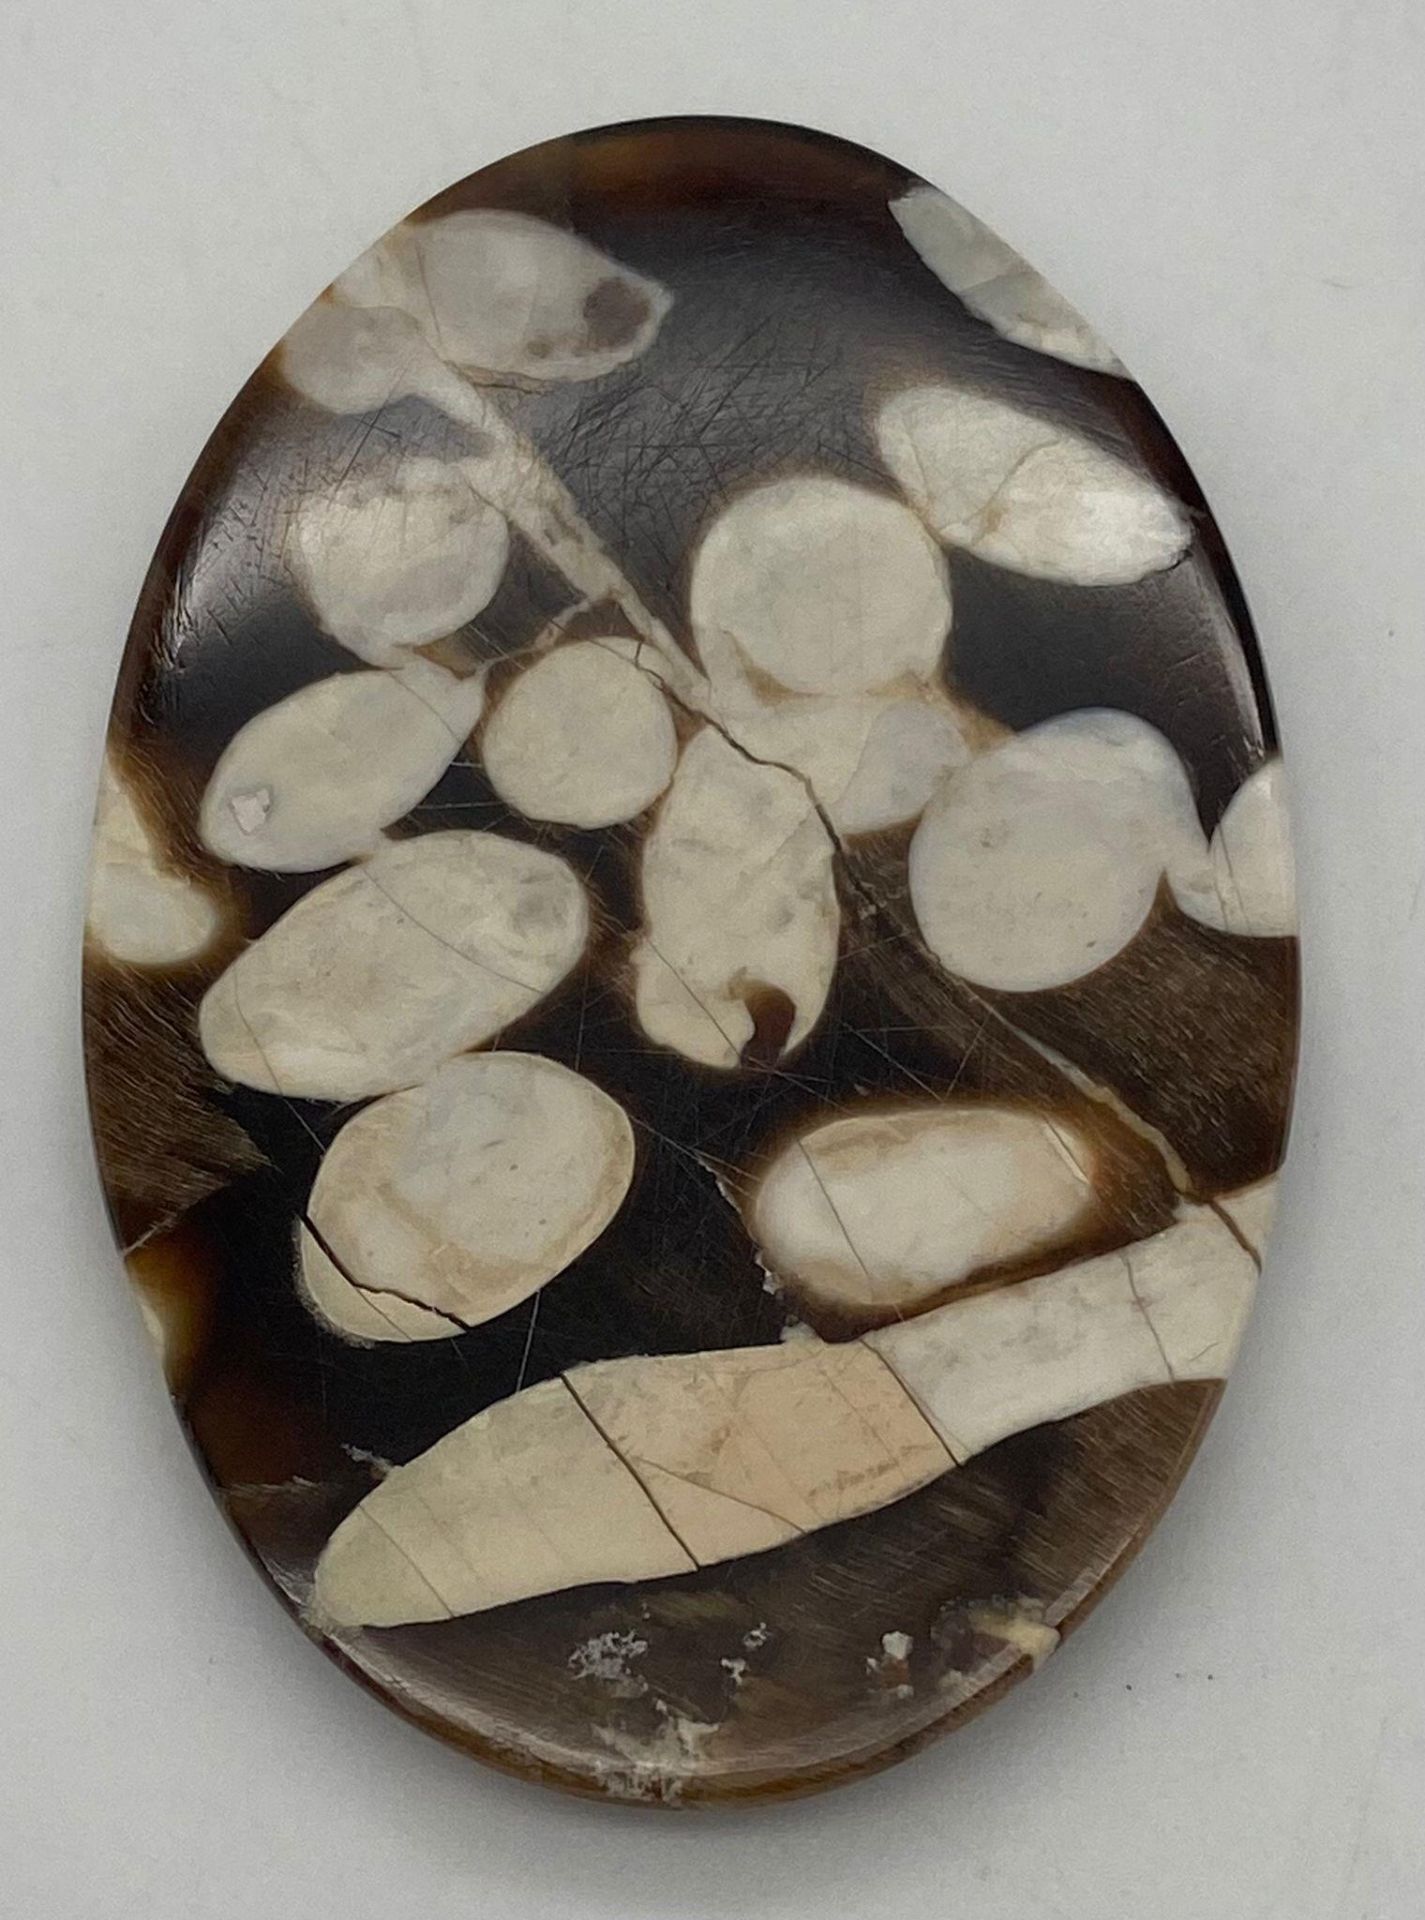 A palaeontological gem, a large (62 carats), unusual, petrified driftwood, often called PEANUT WOOD,